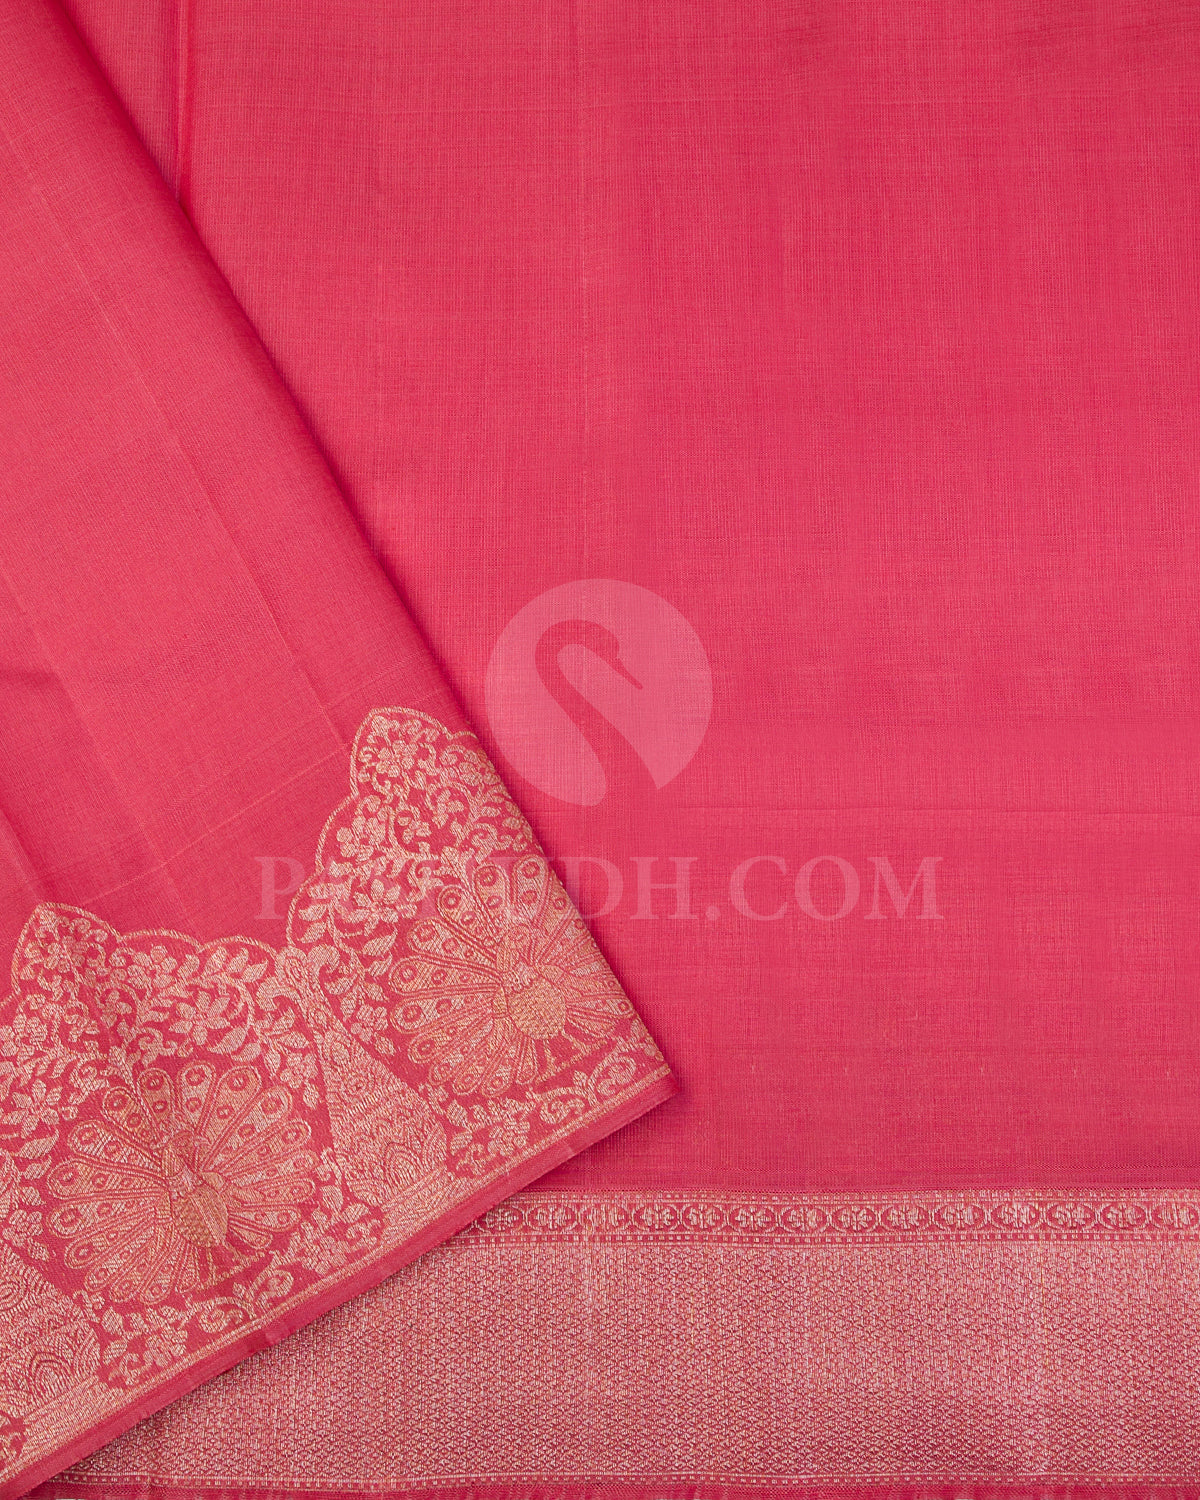 Baby Pink Organza Kanjivaram Silk Saree - S1021(D) - View 3